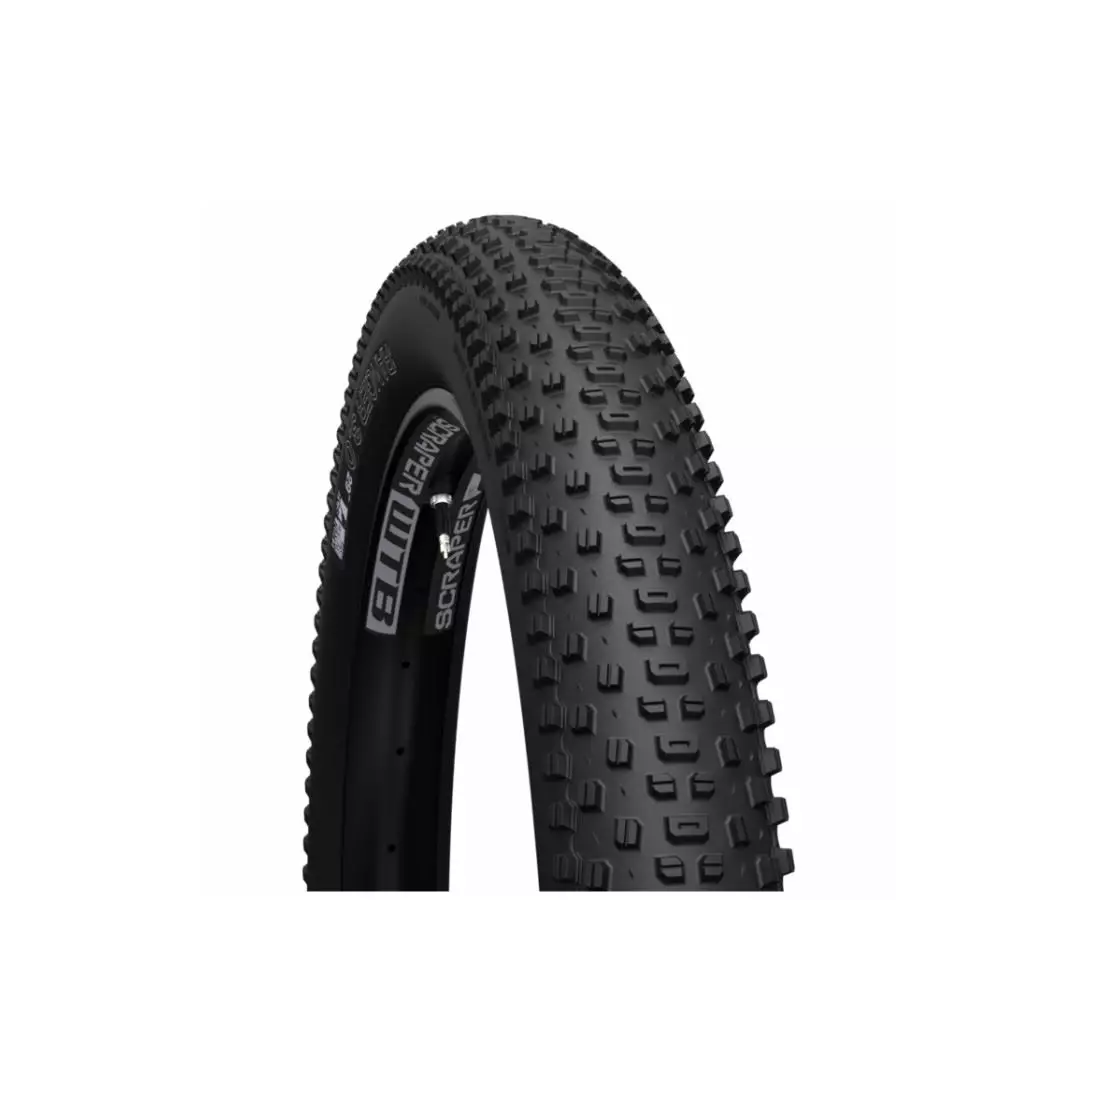 WTB folding bicycle tire 27,5''x2,8 RANGER Tough Fast rollin black